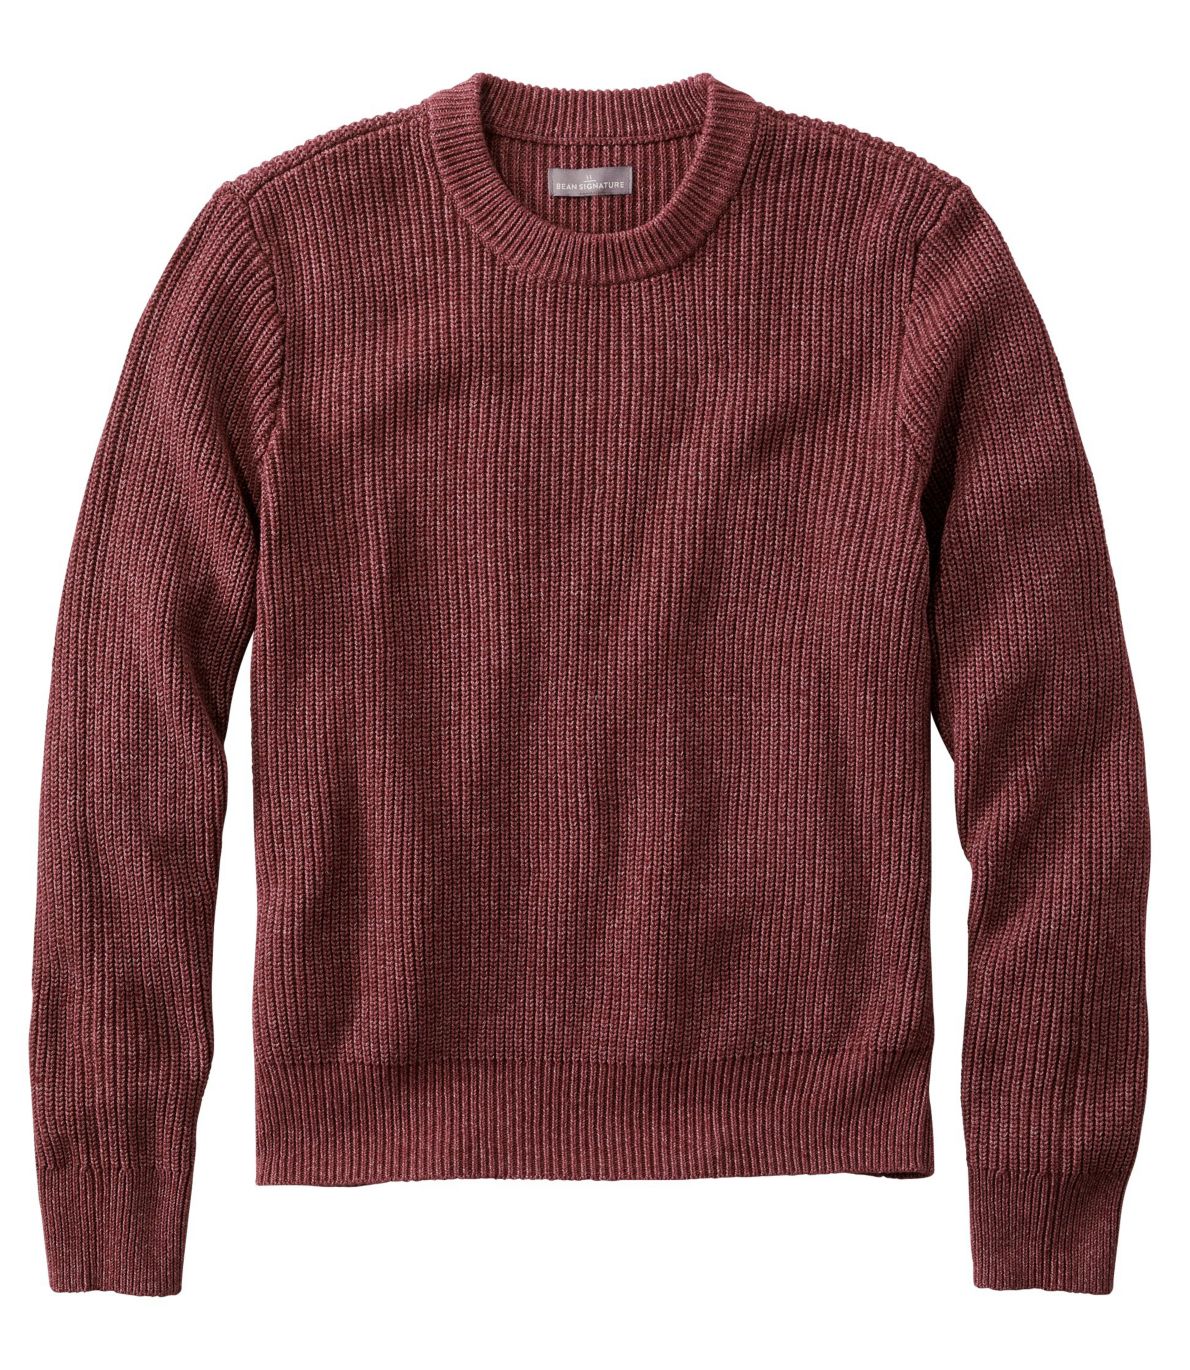 Men's Signature Shaker Stitch Sweater, Crewneck